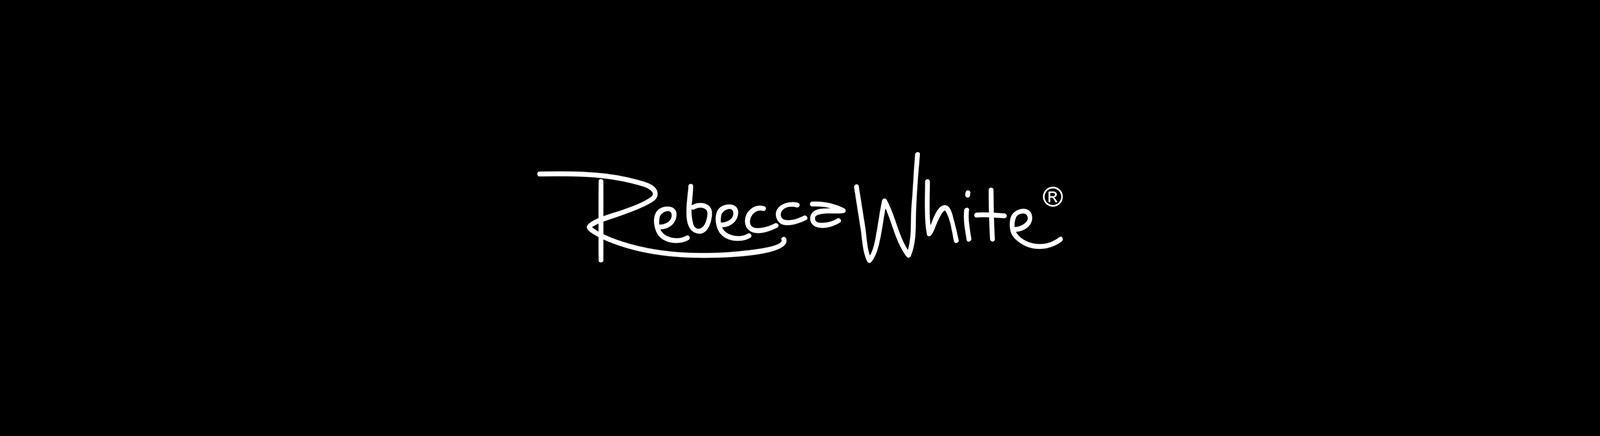 Rebecca White Schuhe online kaufen im Prange Schuhe Shop